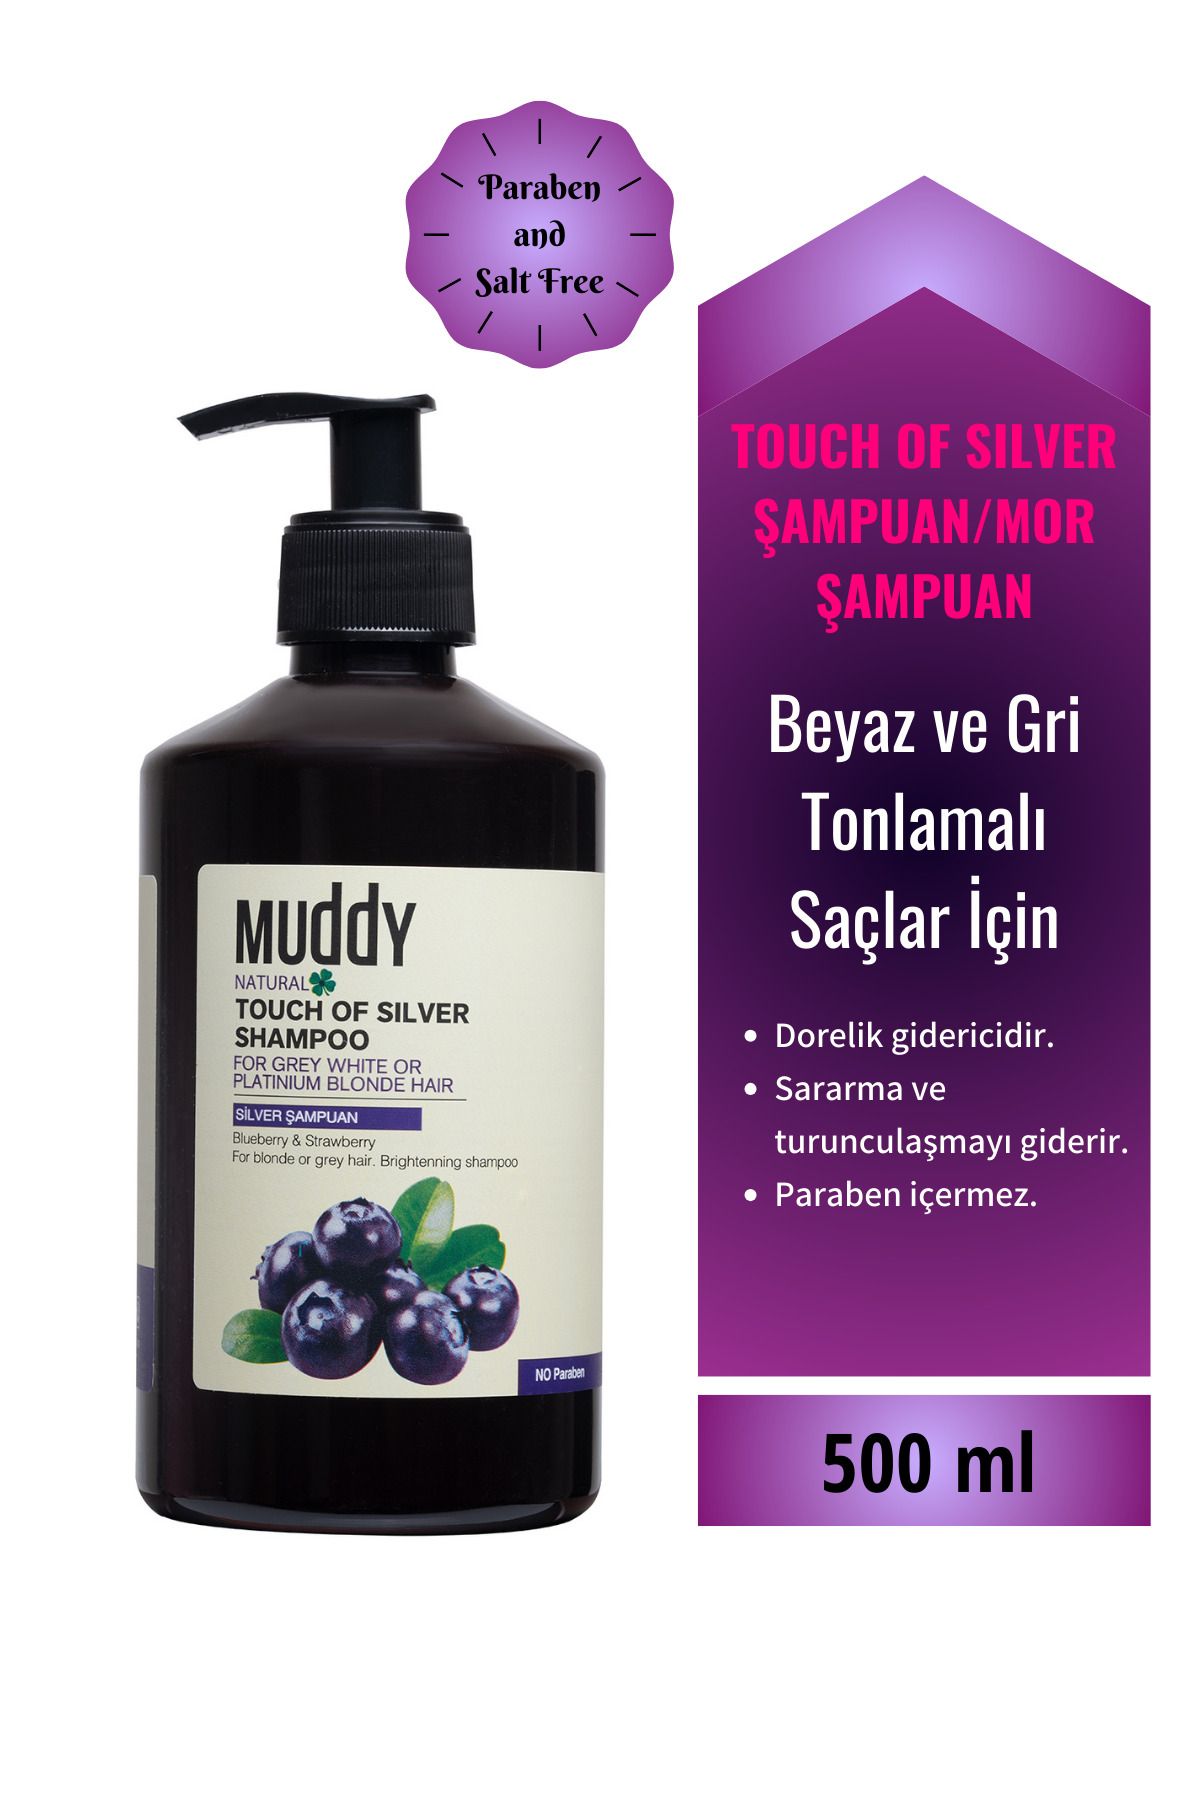 Muddy Turunculaşma Sararma Karşıtı Touch Of Silver Şampuan /mor Şampuan 500 ml